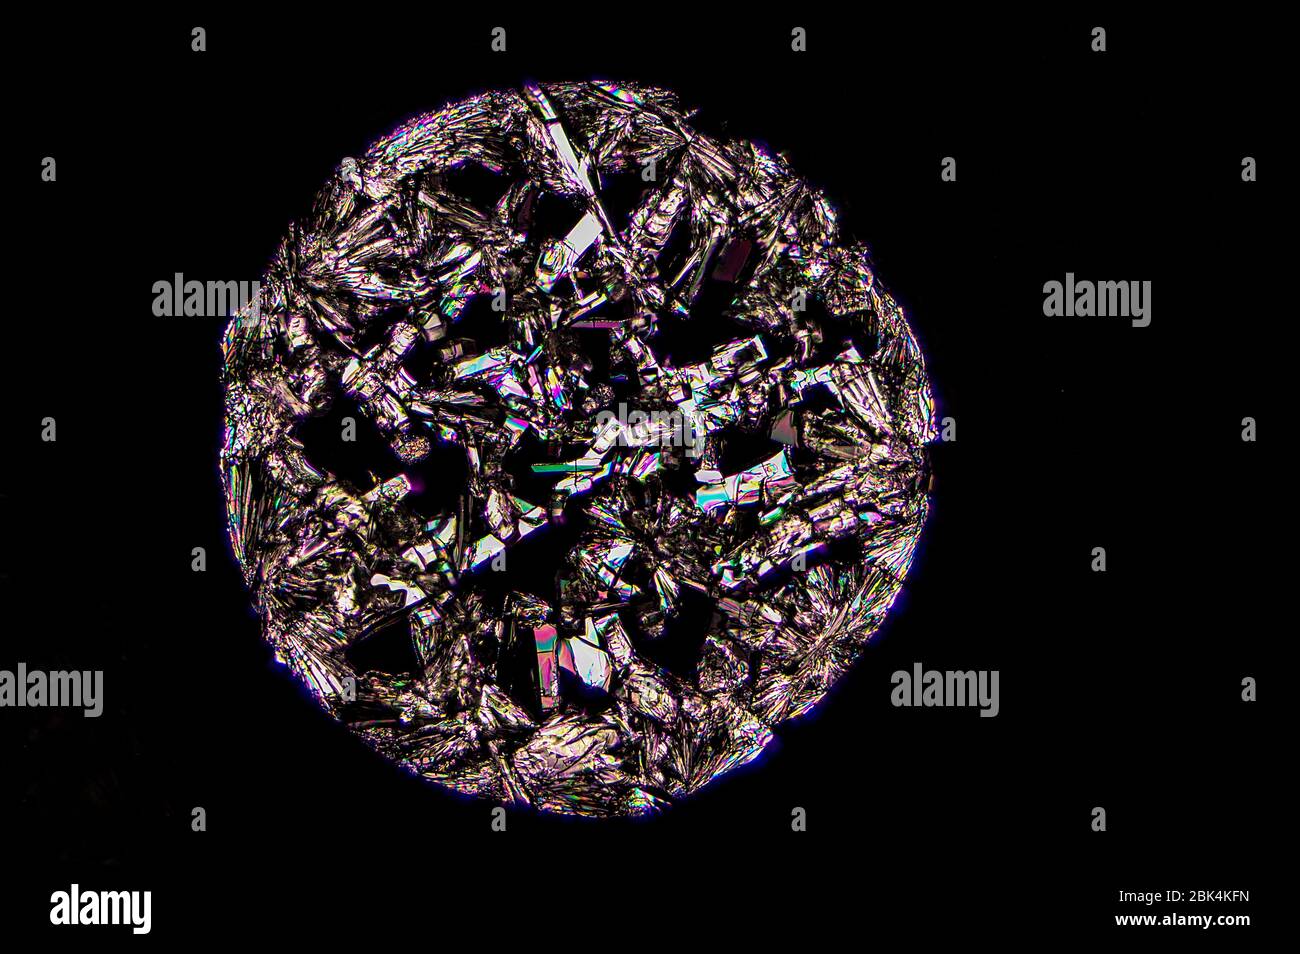 Vitamin C crystal seen under polarised light microscopy Stock Photo